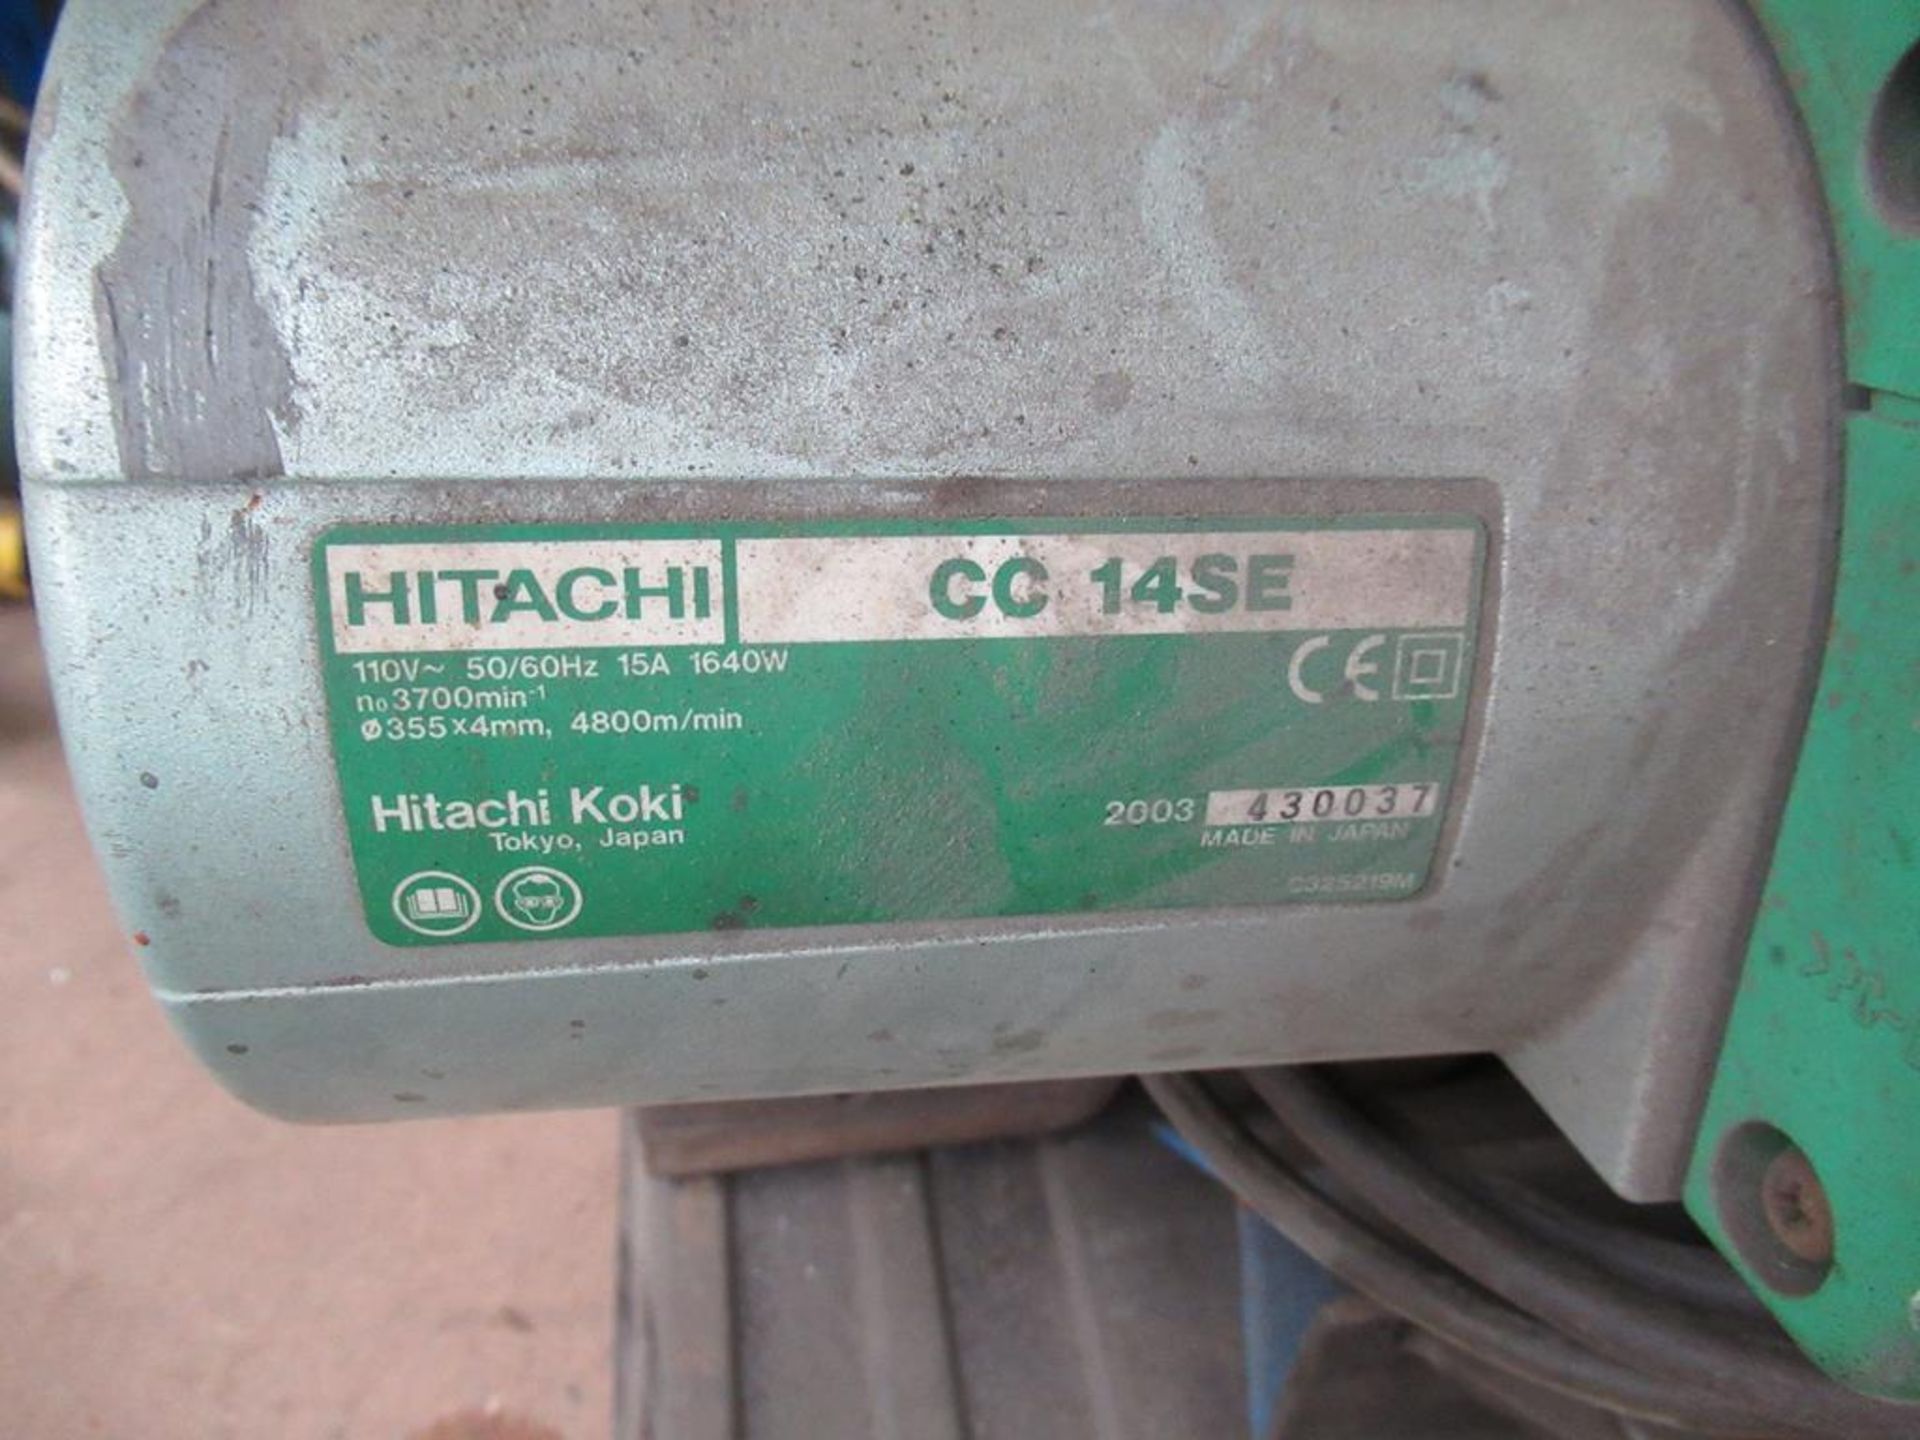 Hitachi 110V CC14SE chop saw - untested - Image 2 of 2